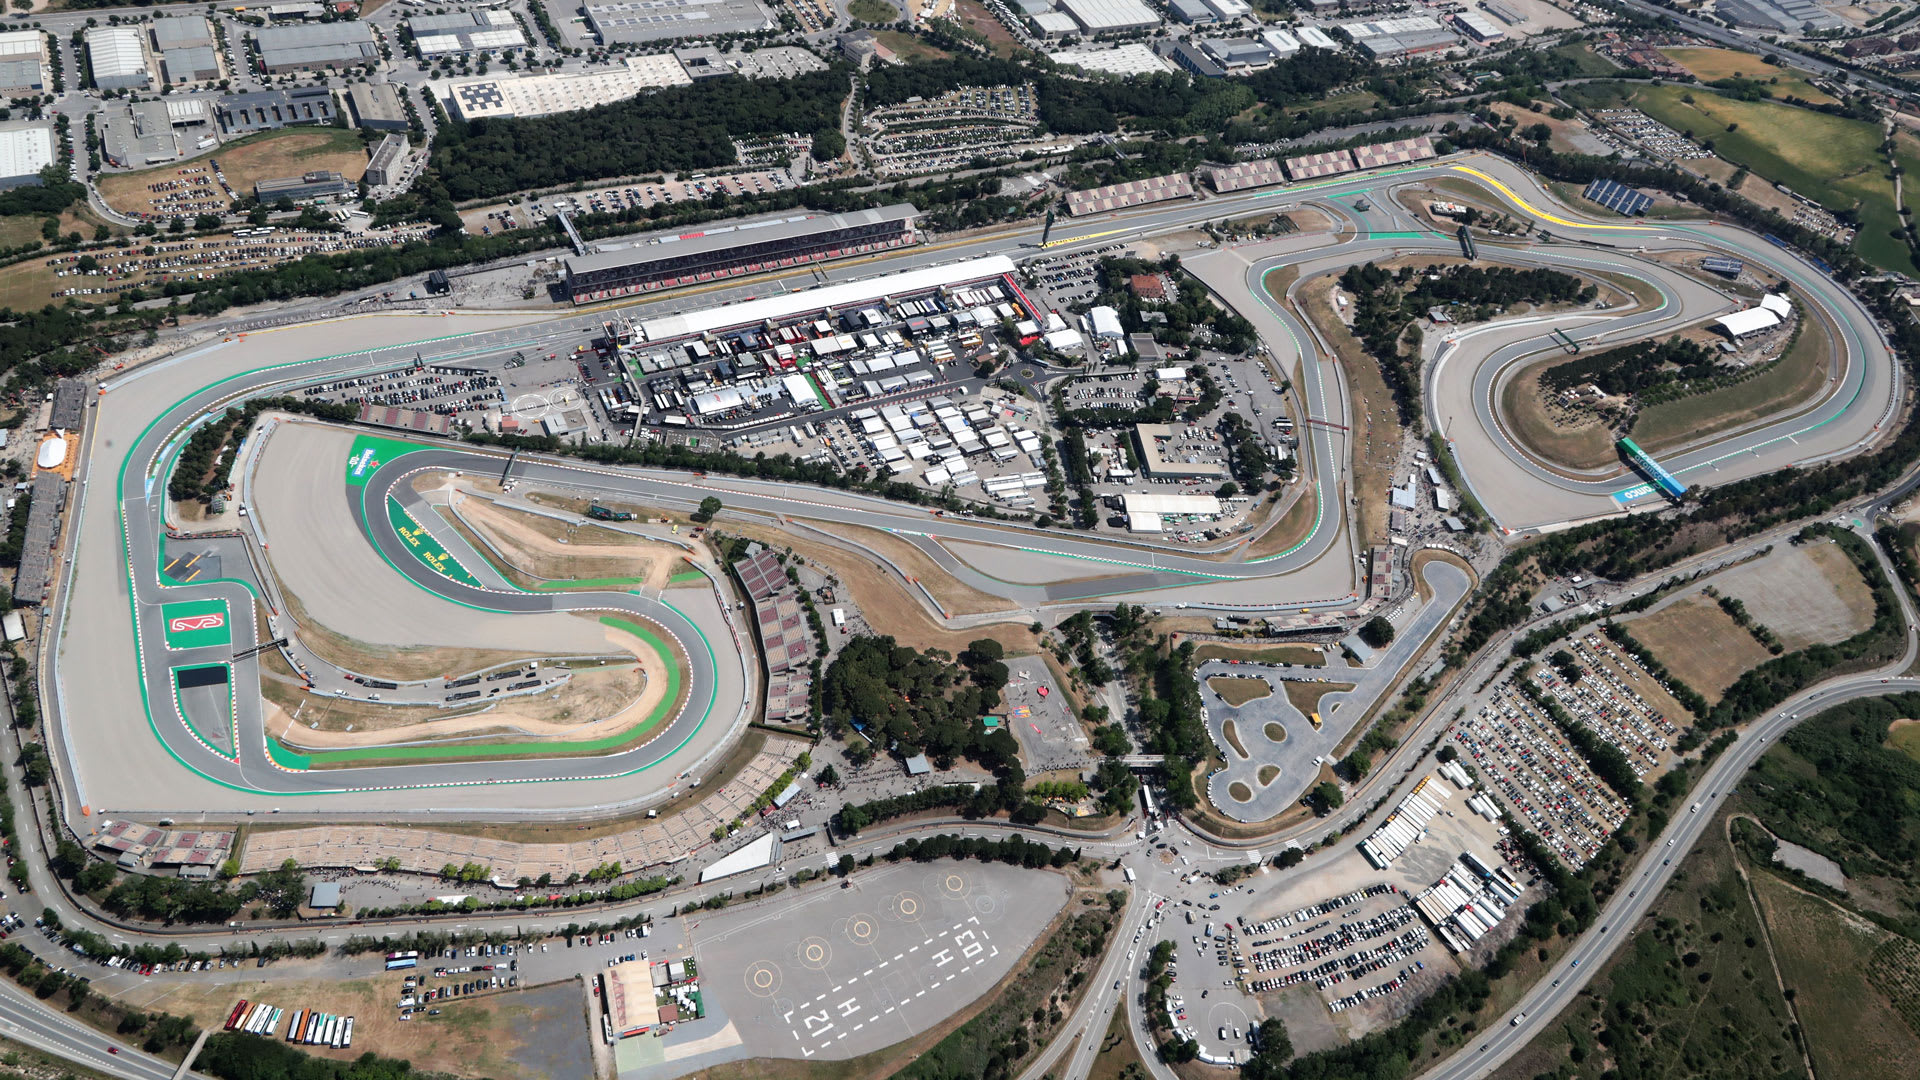 Circuit de Barcelona-Catalunya to feature new configuration for 2023 Spanish Grand Prix Formula 1®